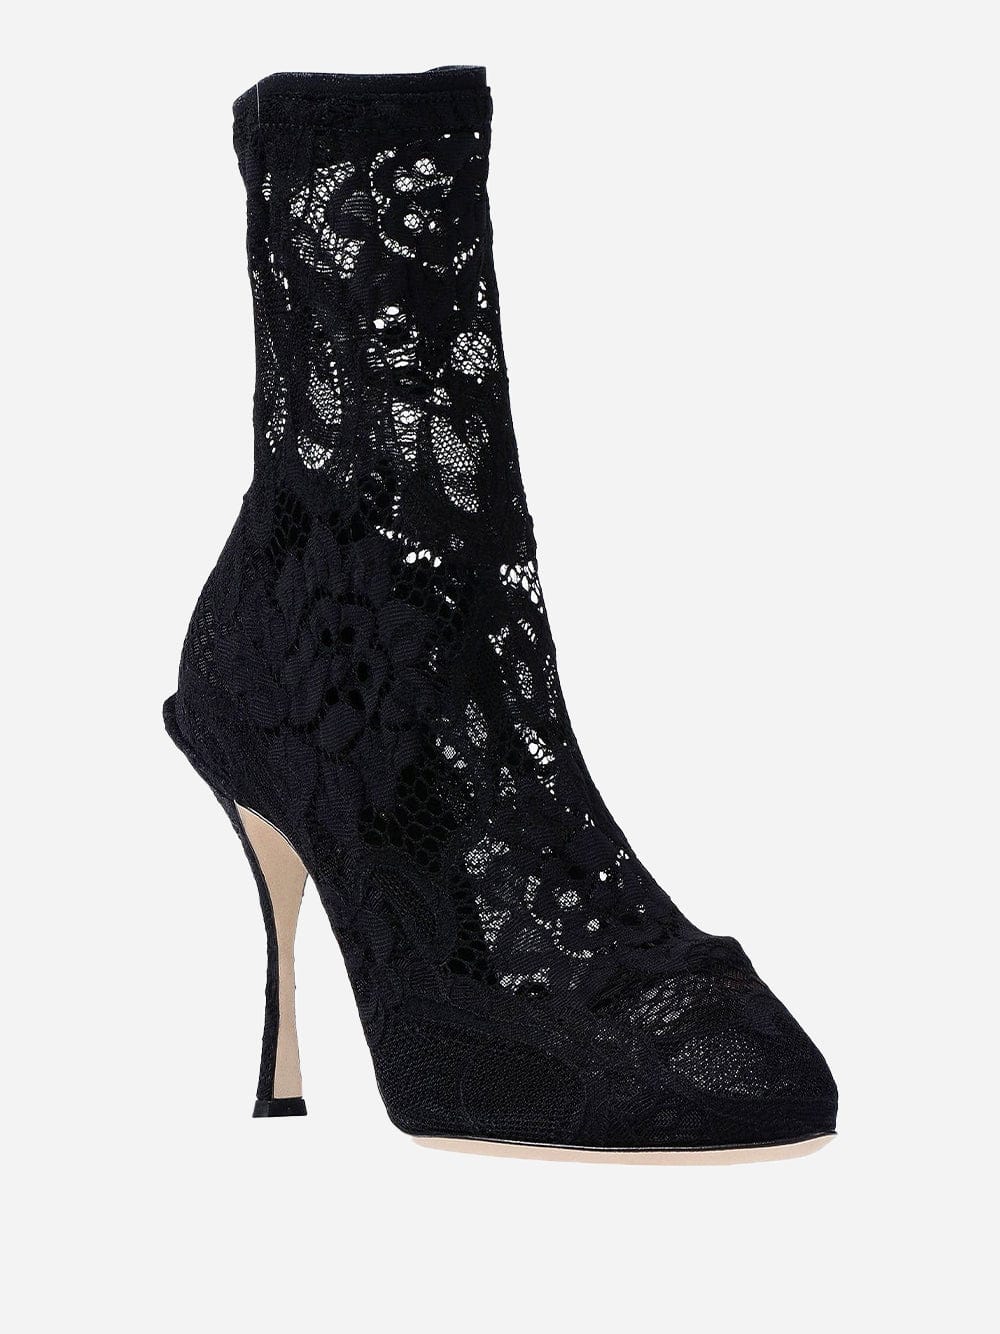 Dolce & Gabbana Taormina Lace Ankle Boots